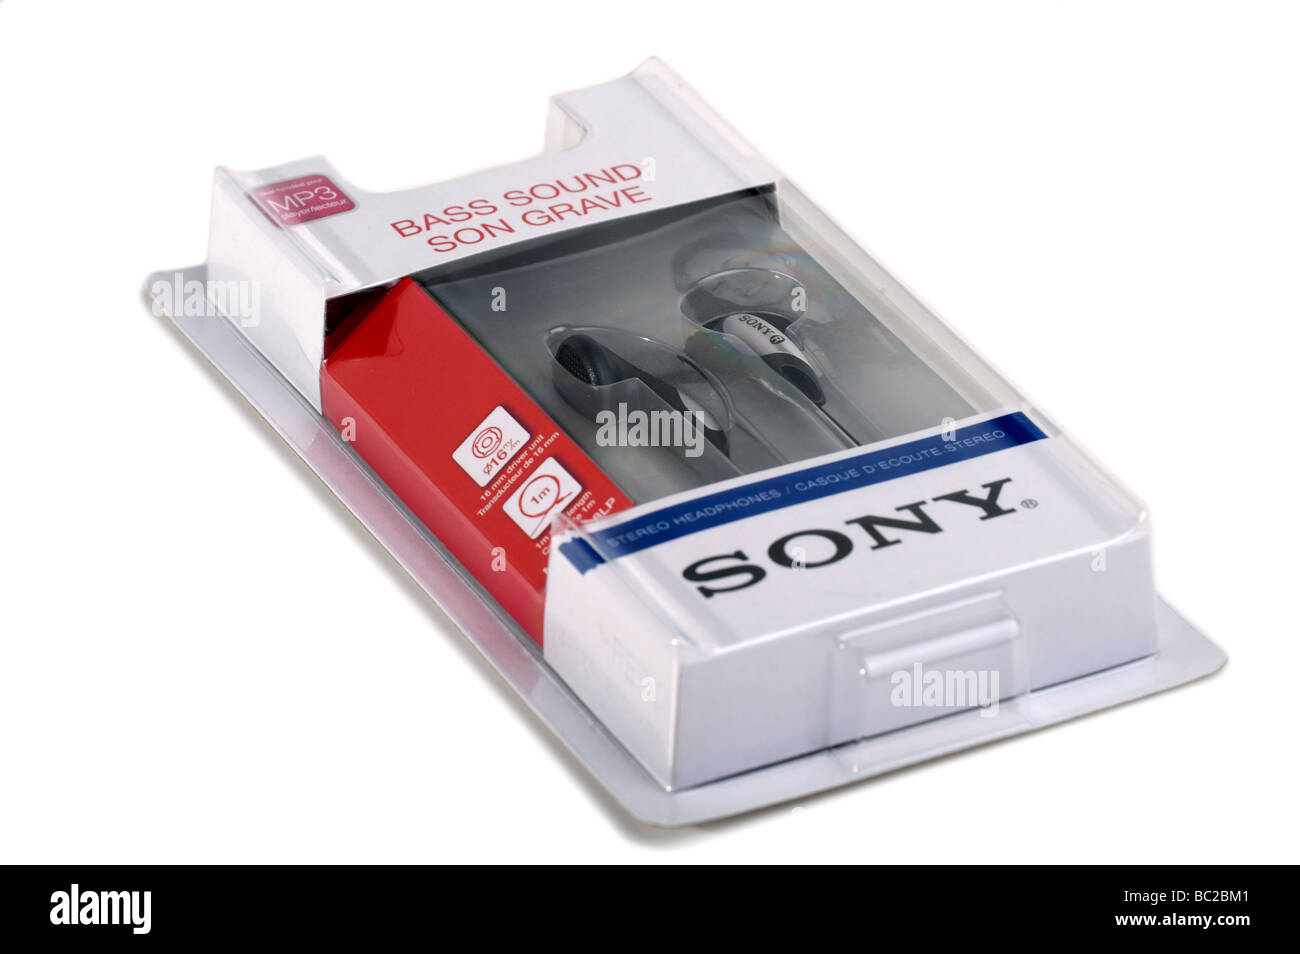 Cellophan Pack Sony Kopfhörer Stockfoto